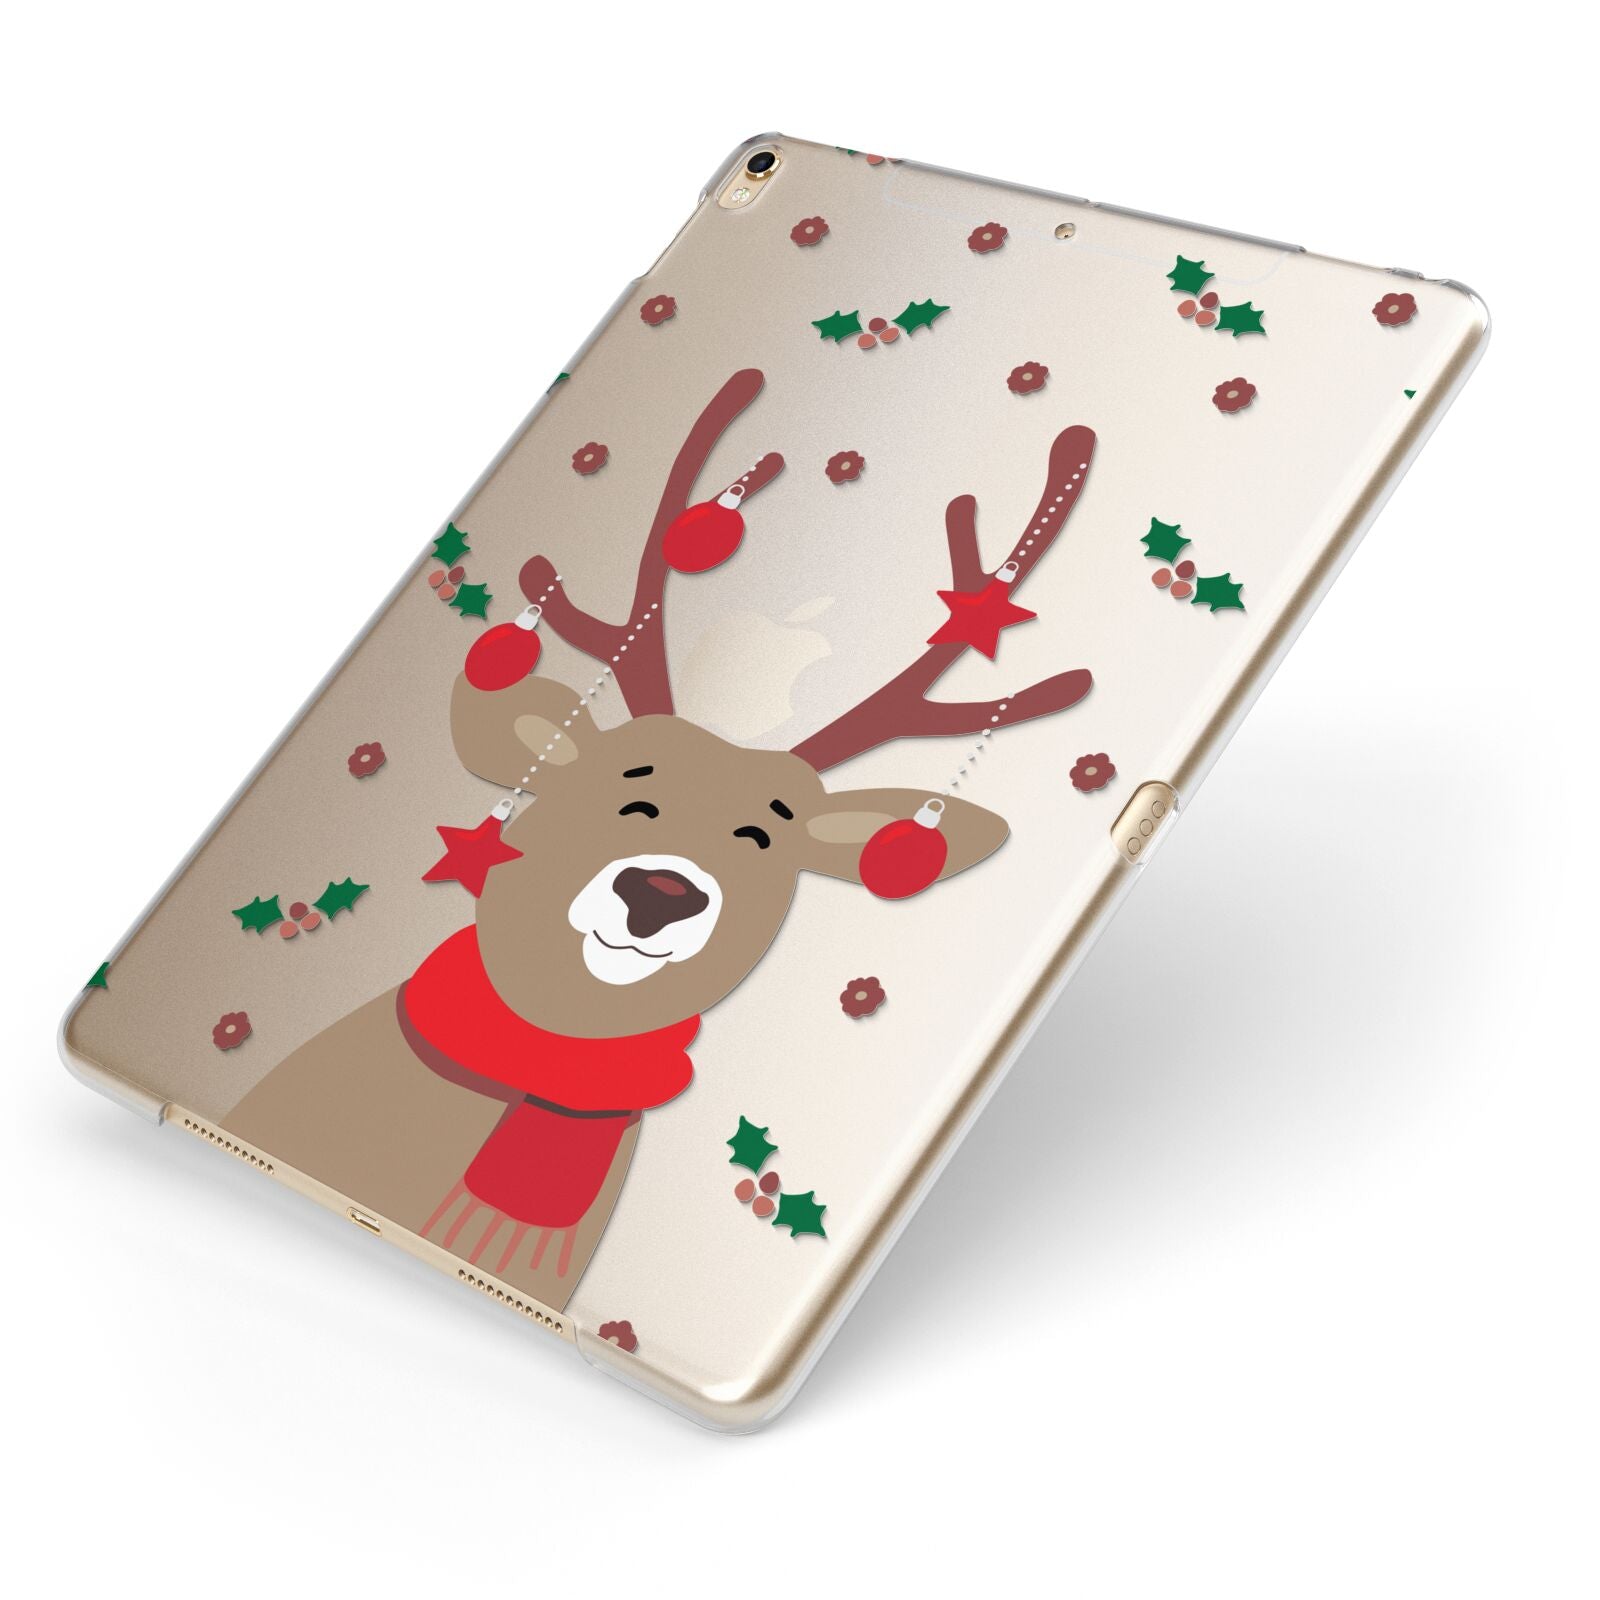 Reindeer Christmas Apple iPad Case on Gold iPad Side View